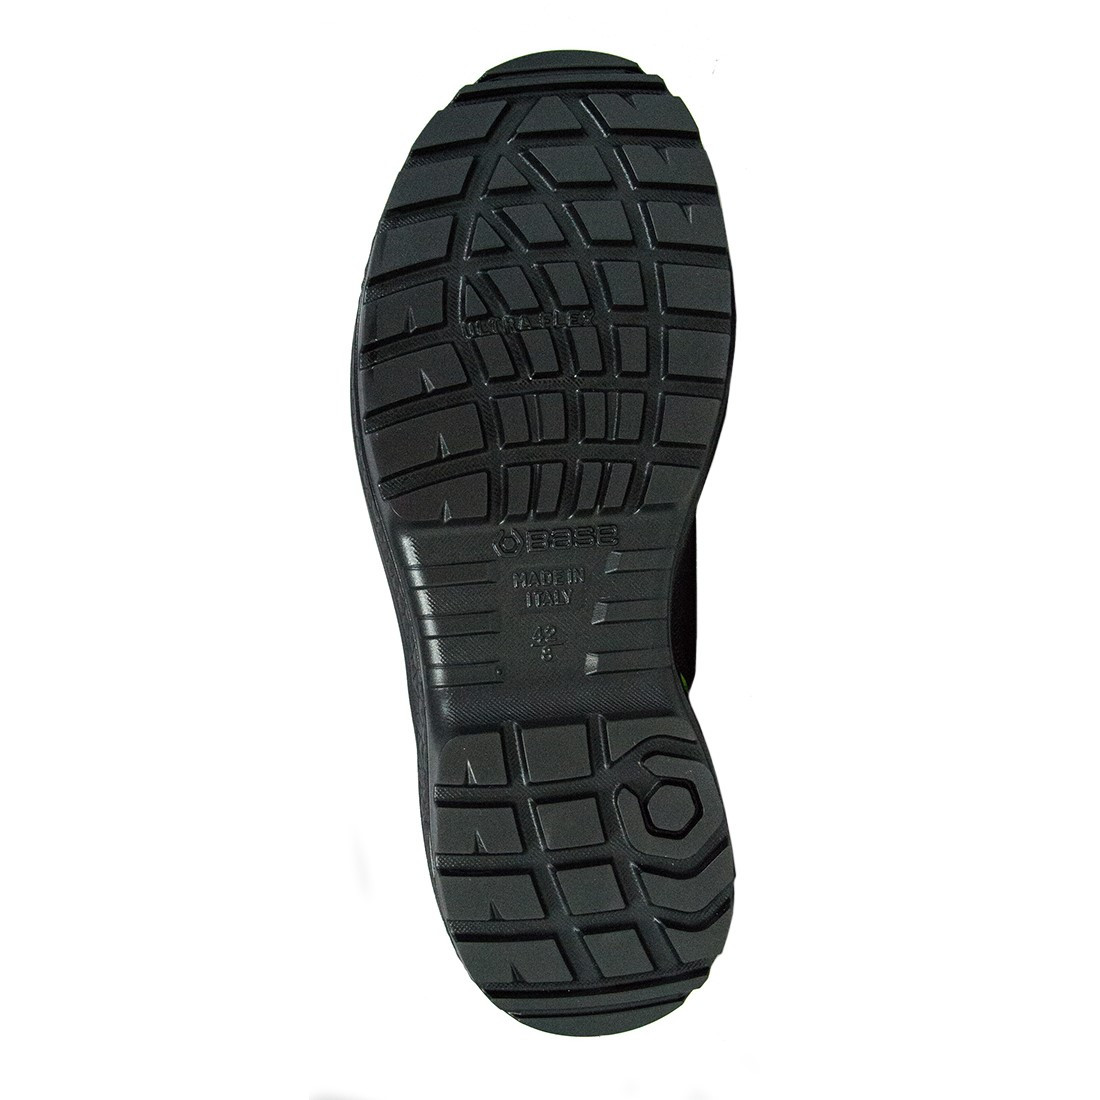 Be-Extreme Boot S3 CI SRC - Les chaussures de protection